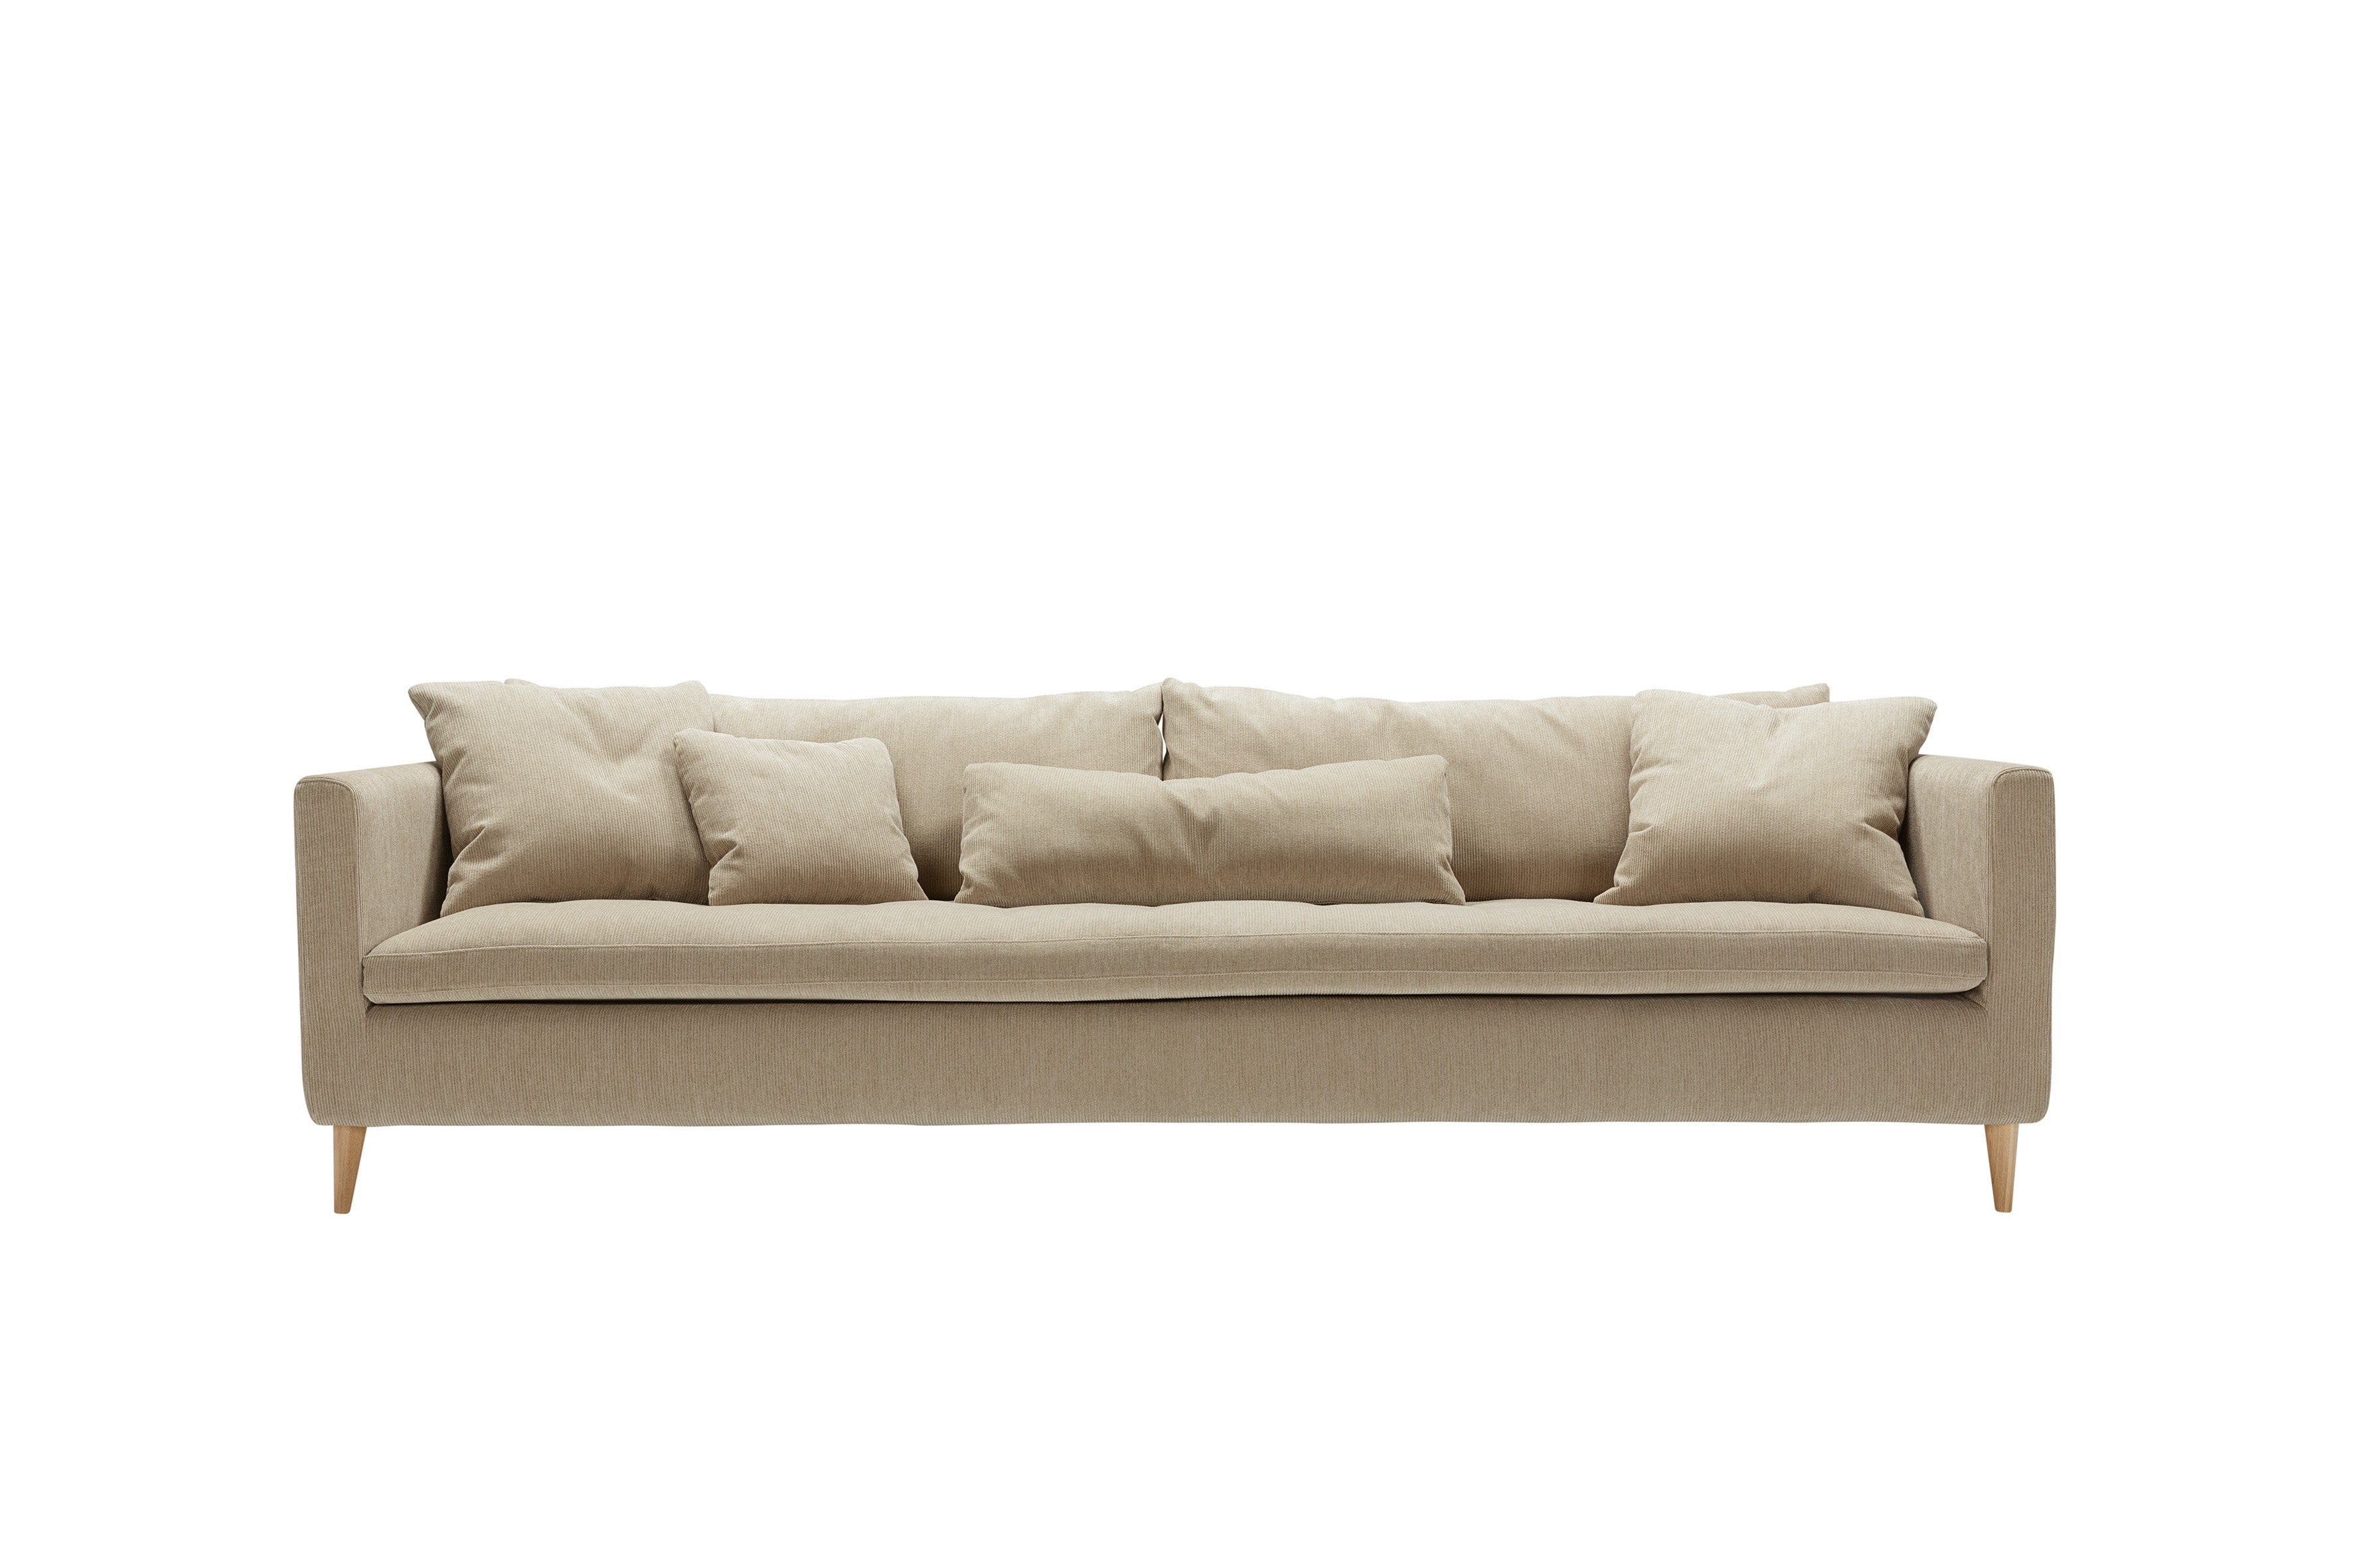 Mastrella Lana 3 Seater Sofa